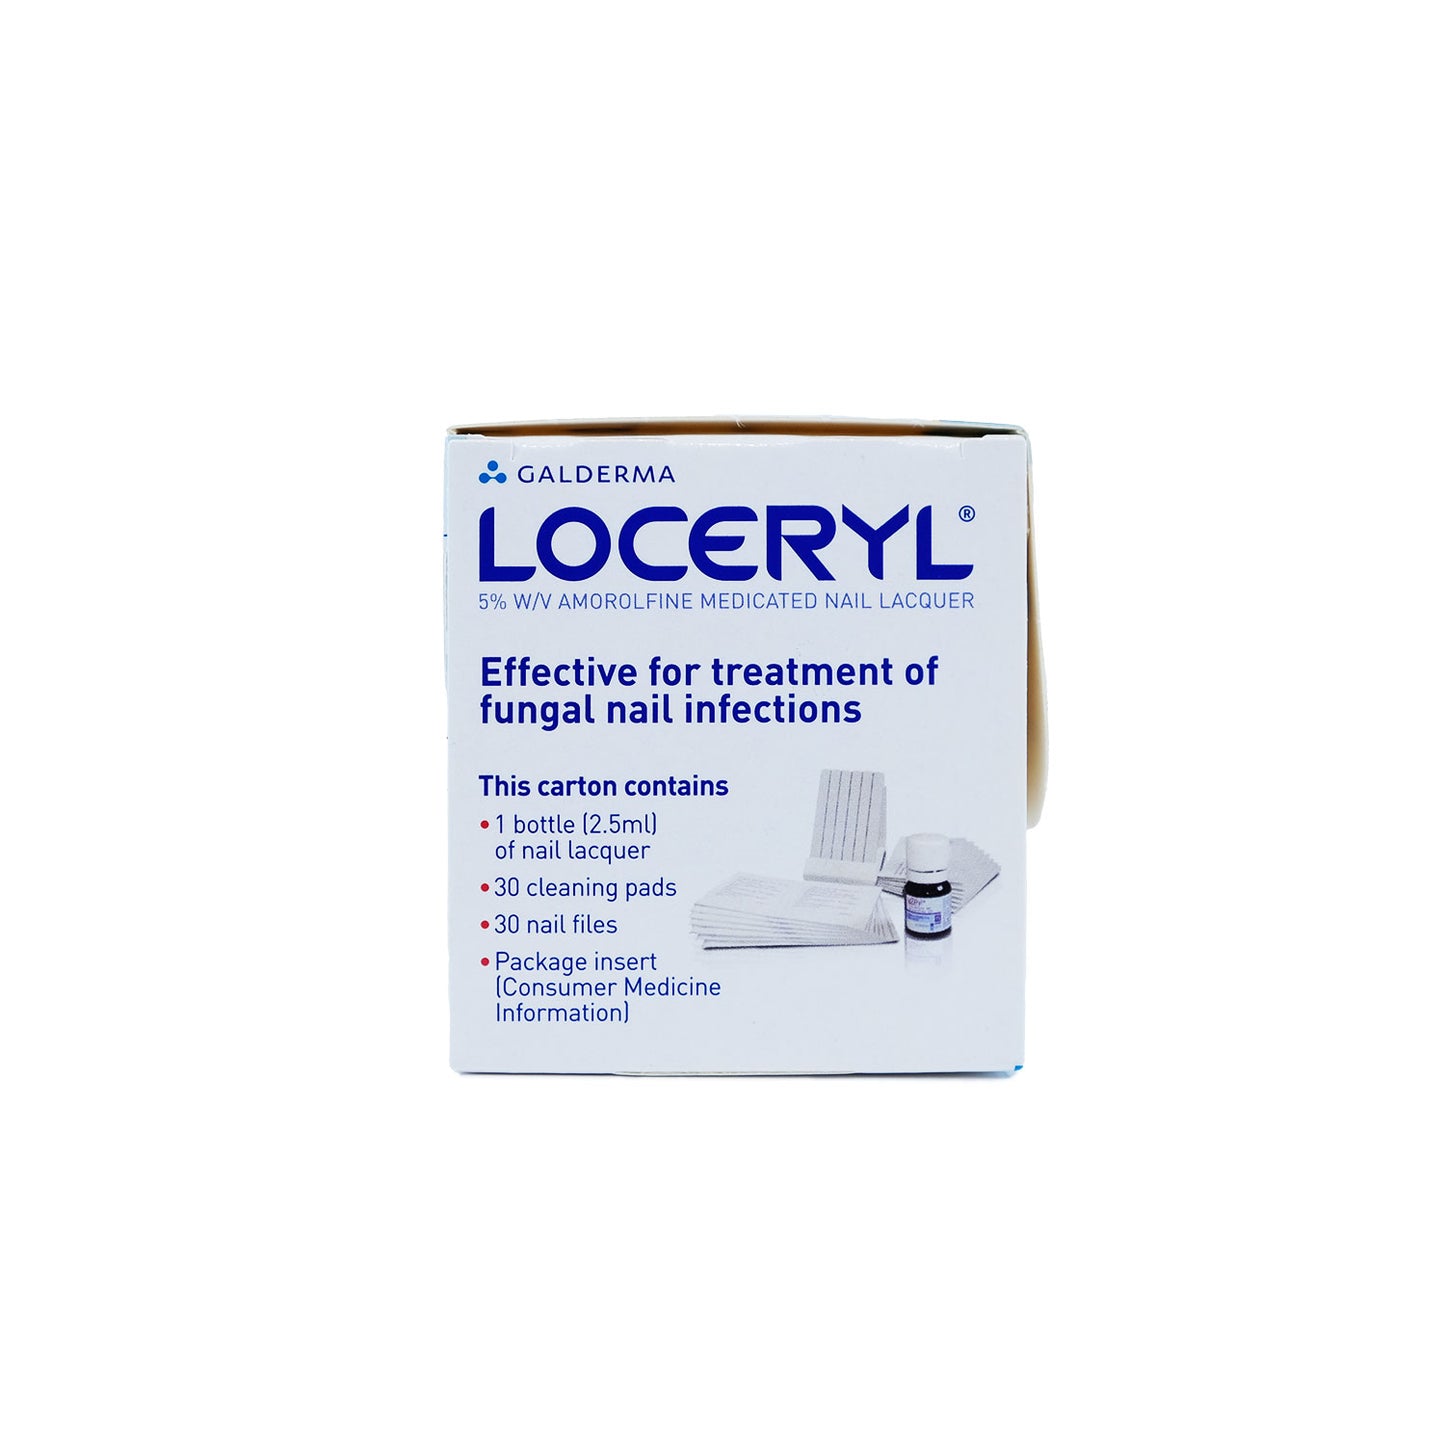 Loceryl 5% W/V Amorolfine Medicated Nail Lacquer 2.5ml